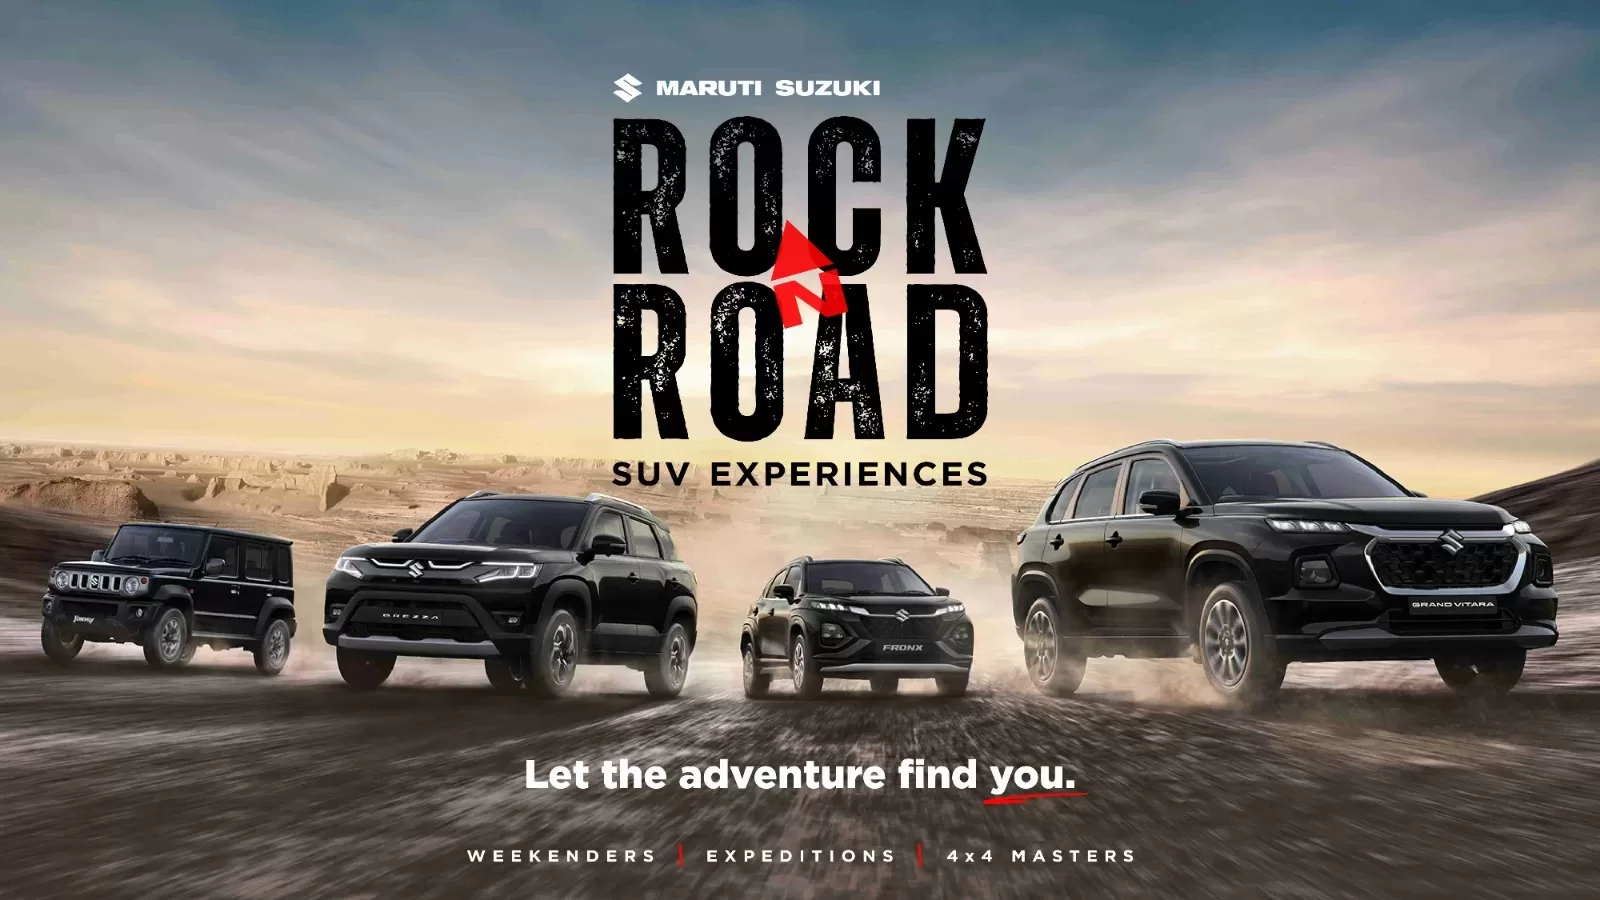 Maruti Suzuki introduces ‘ROCK N’ ROAD SUV Experiences